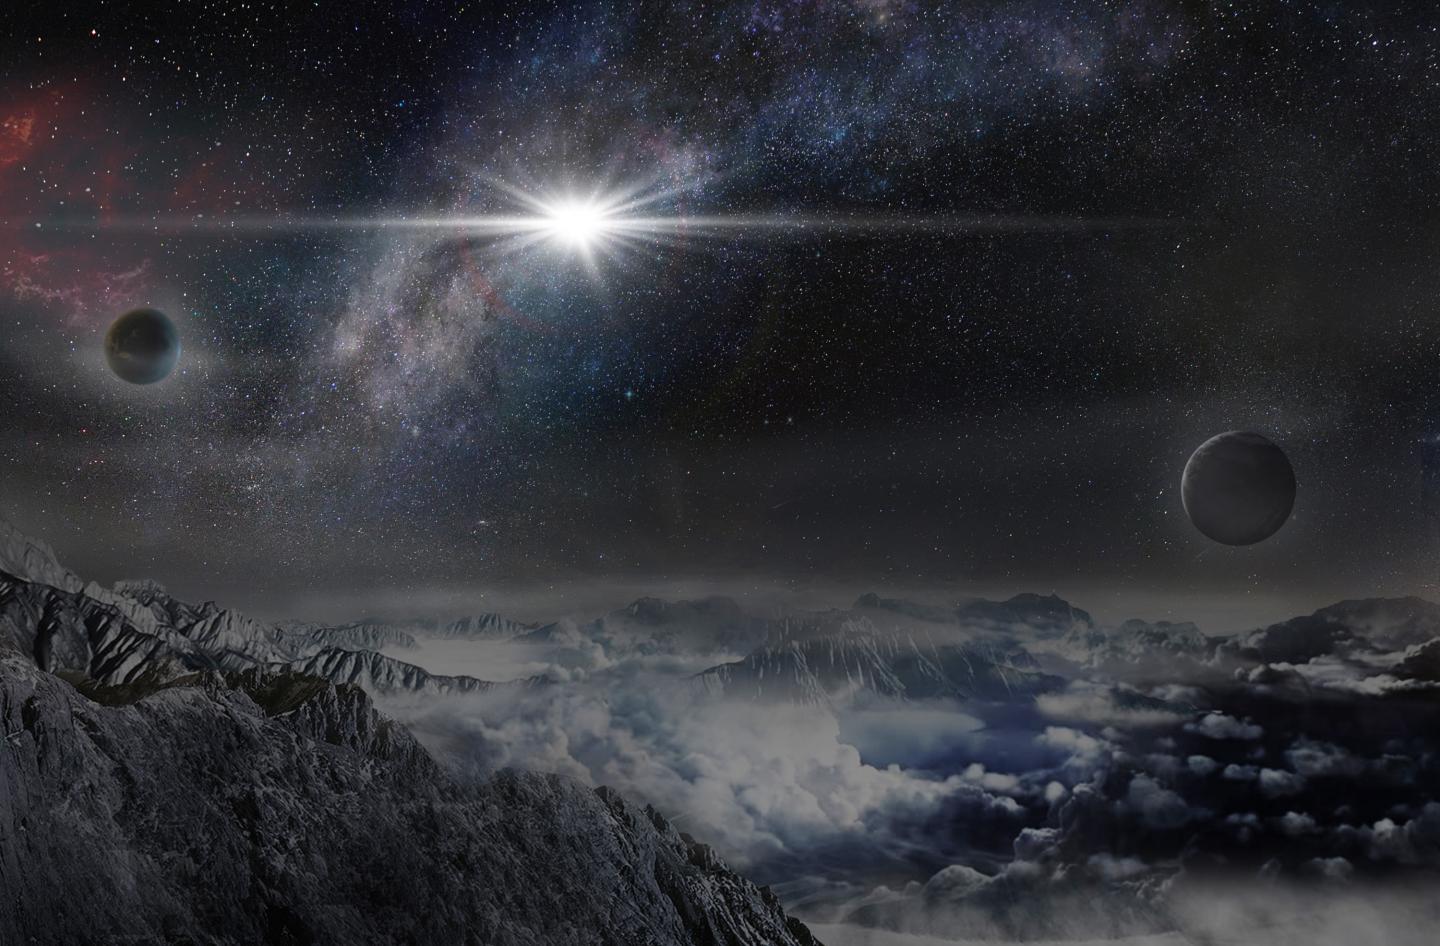 Superluminous Supernova ASASSN-15lh